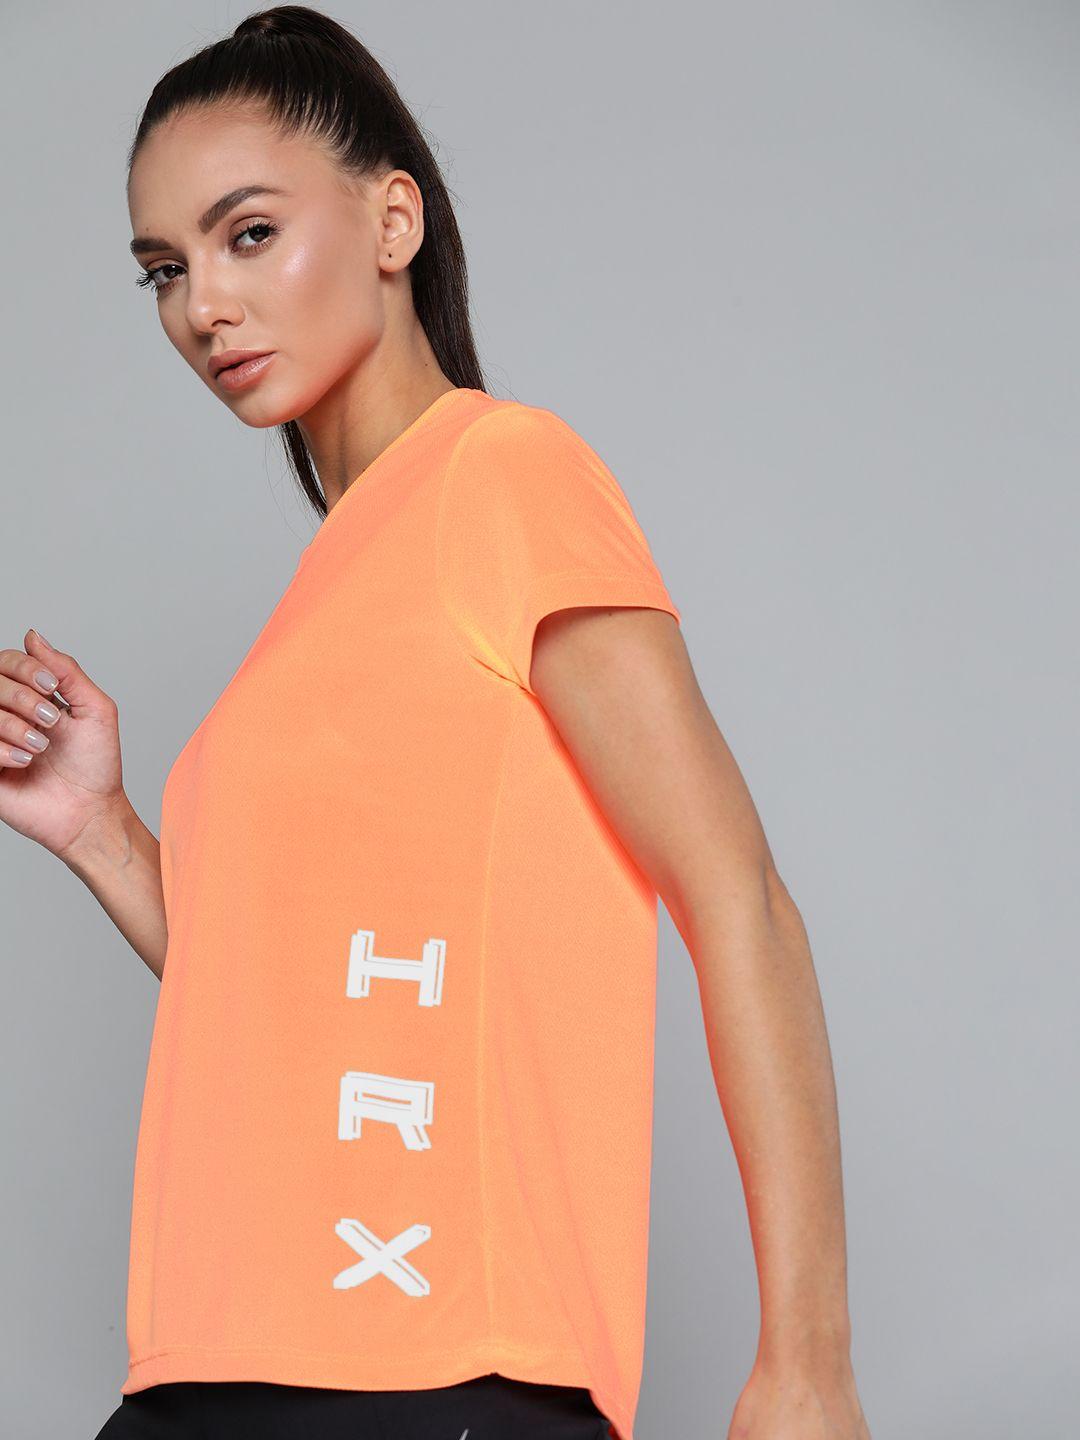 hrx-by-hrithik-roshan-running-women-neon-orange-rapid-dry-brand-carrier-tshirts